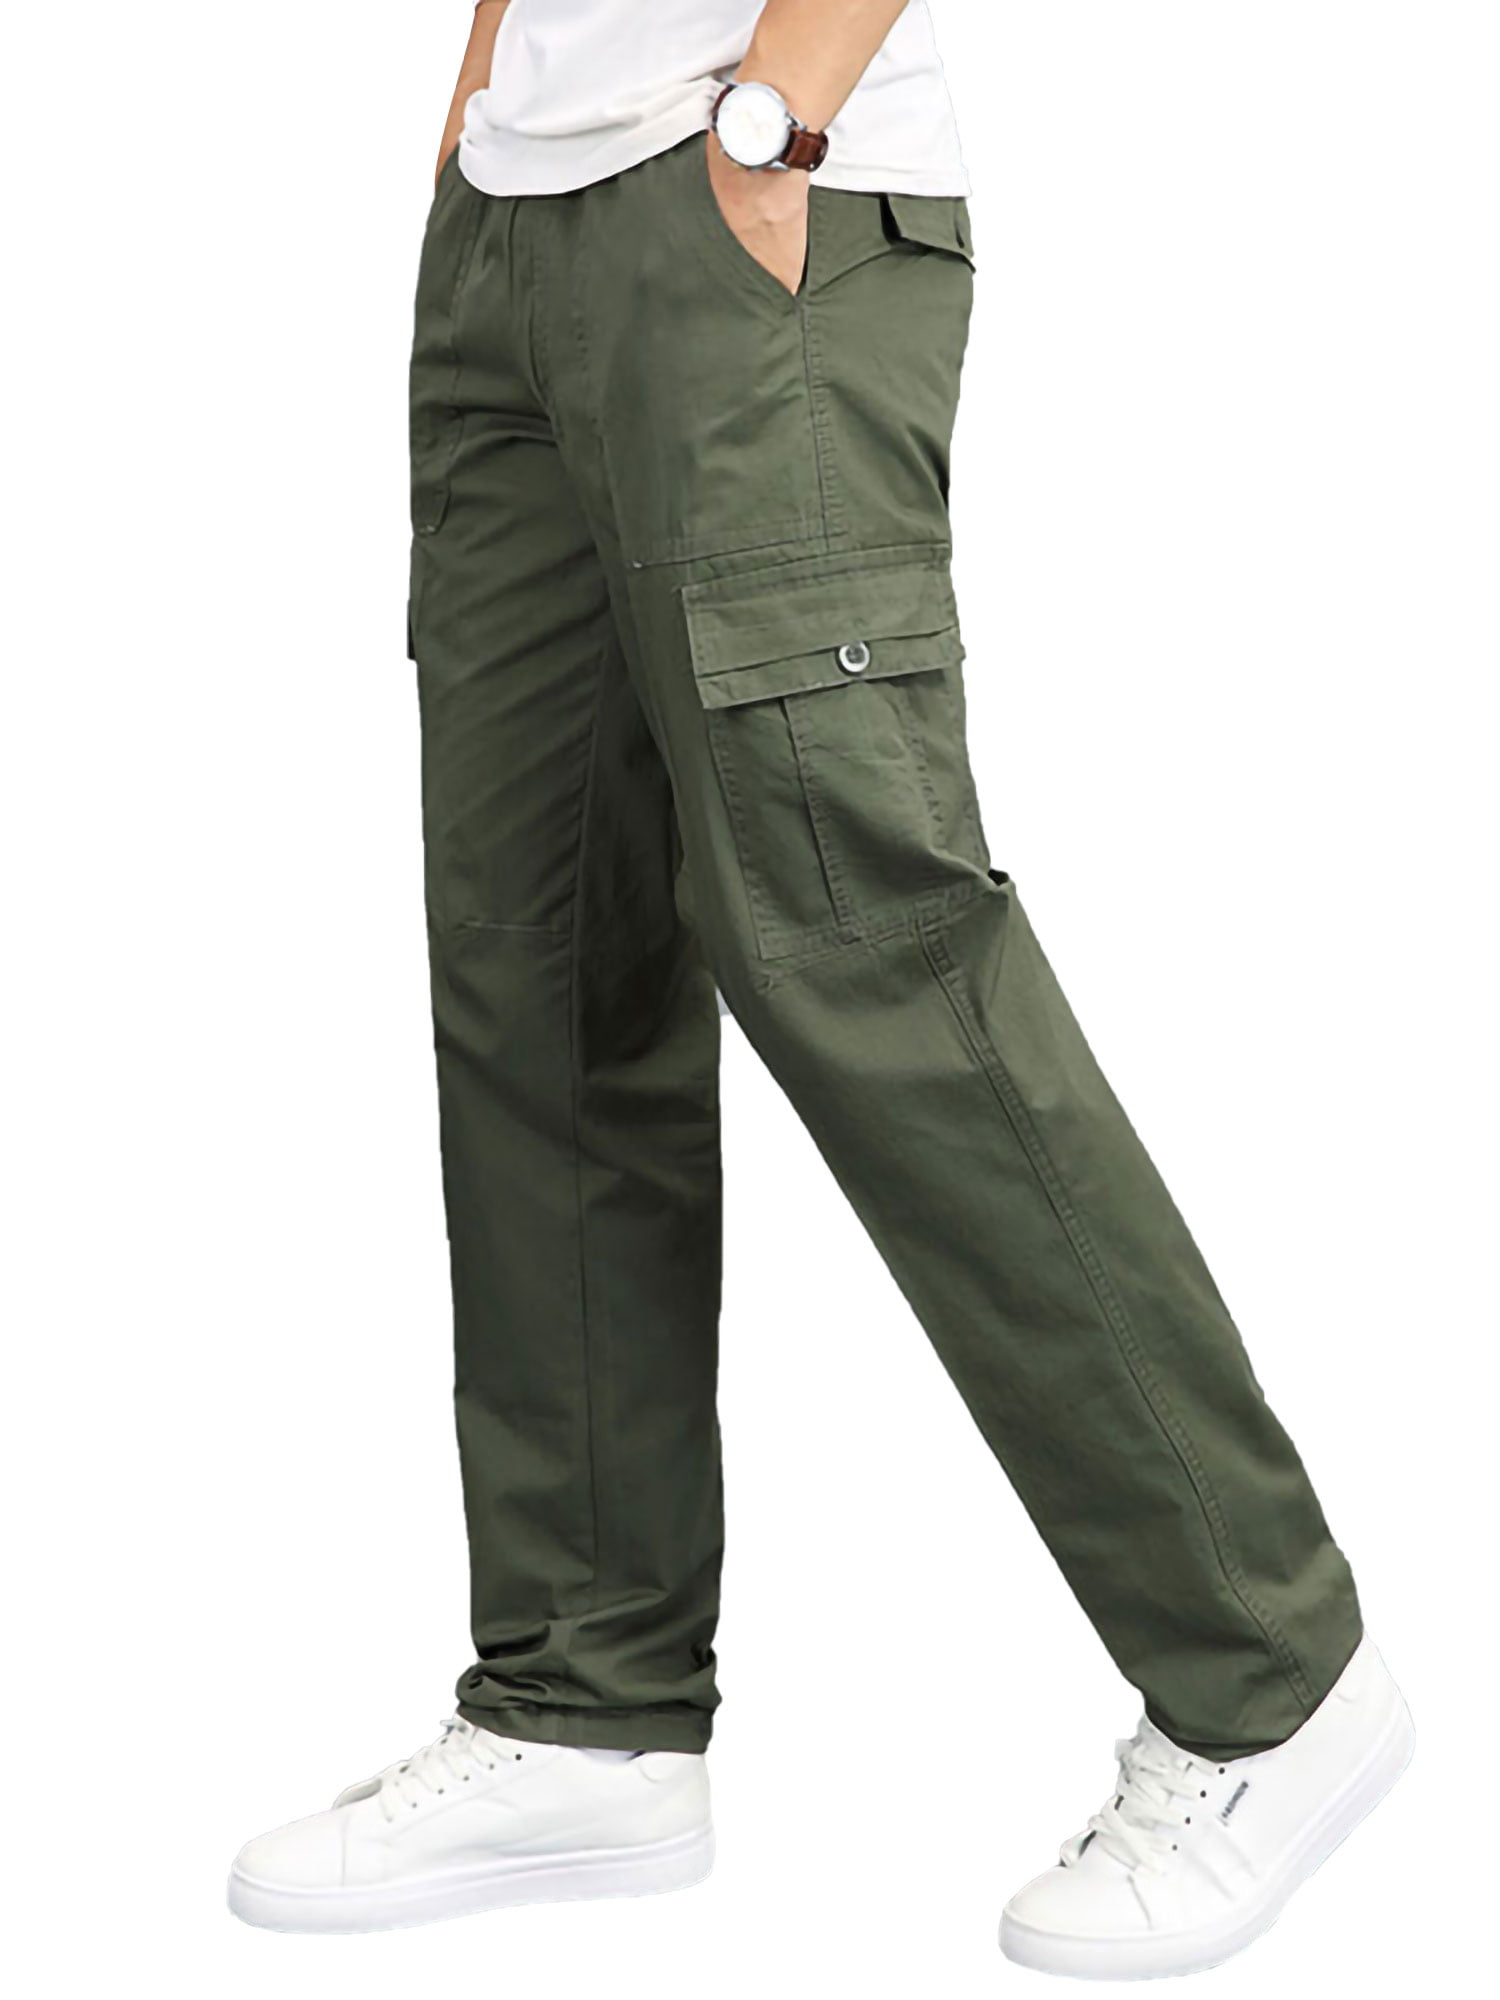 Details about   Titicaca Mens FR Field Pants Flame Resistant Lightweight Elastic Waist Pants 